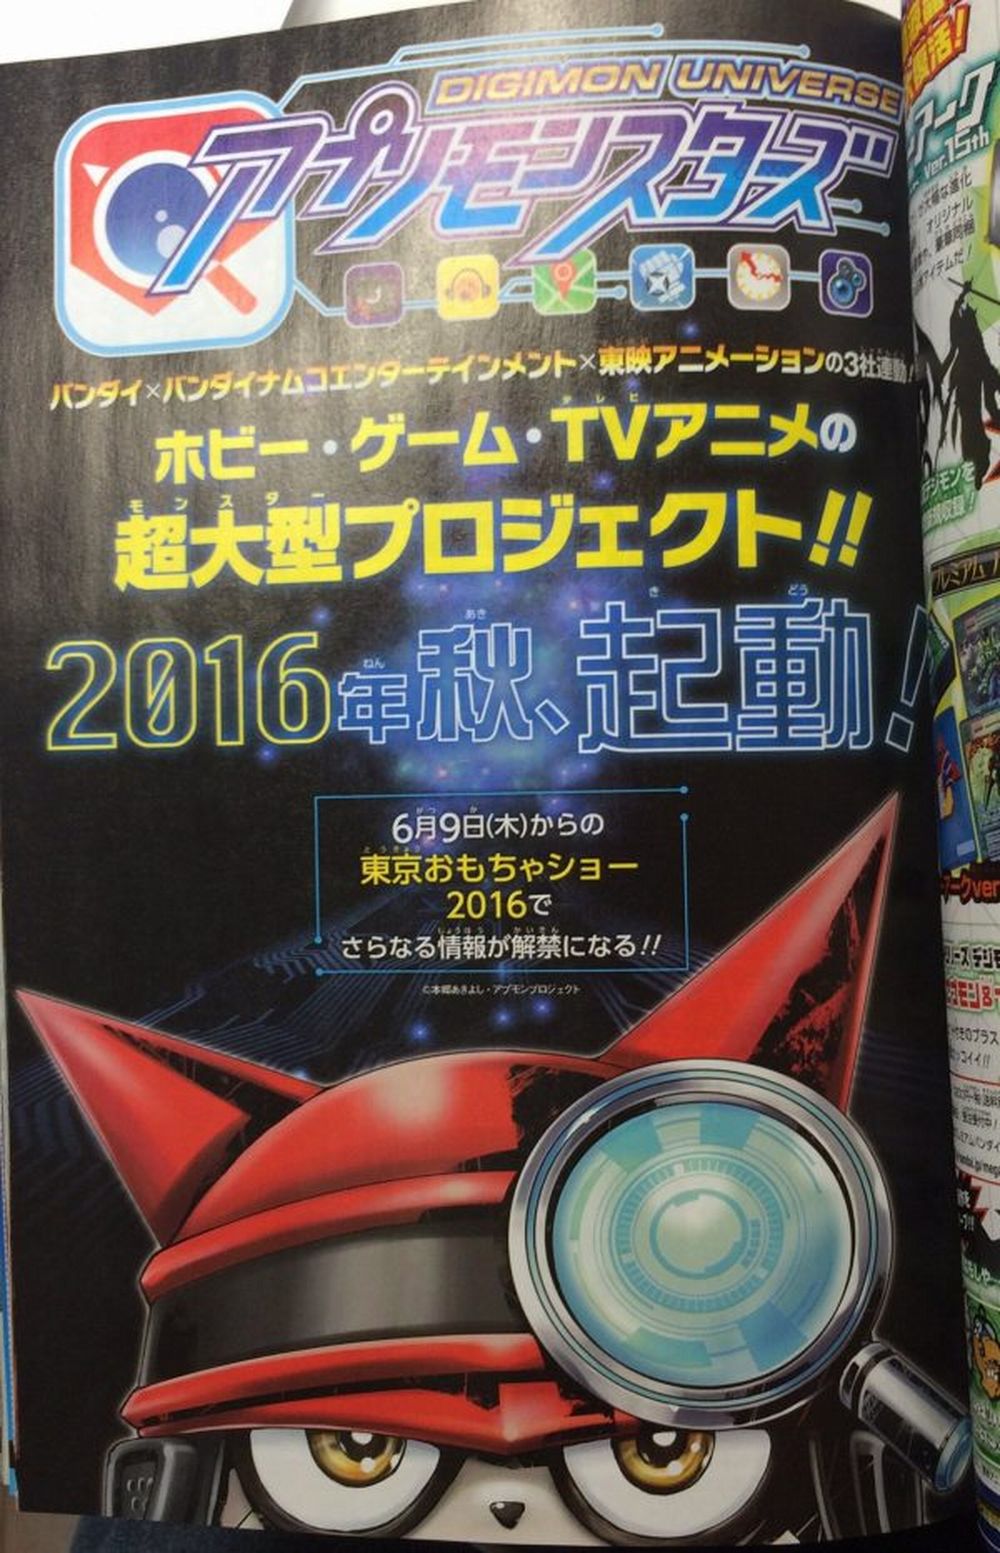 Digimon-Universe-App-Monsters-Tease-Scan-600x932.jpg